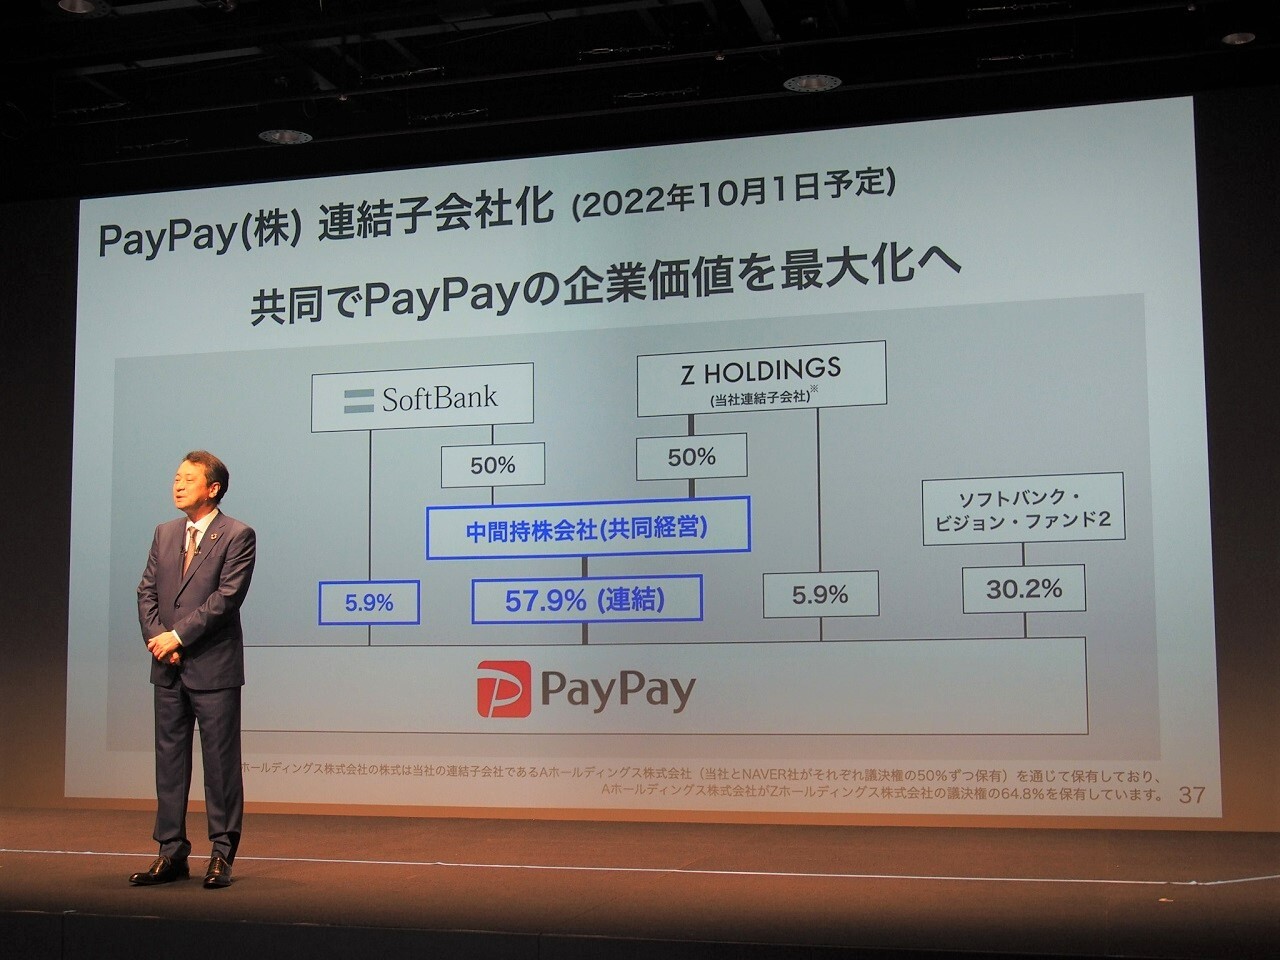 PayPayはソフトバンクとZホールディングスとのサービス連携を一層強化するため、2社による共同運営の形が取られることとなる